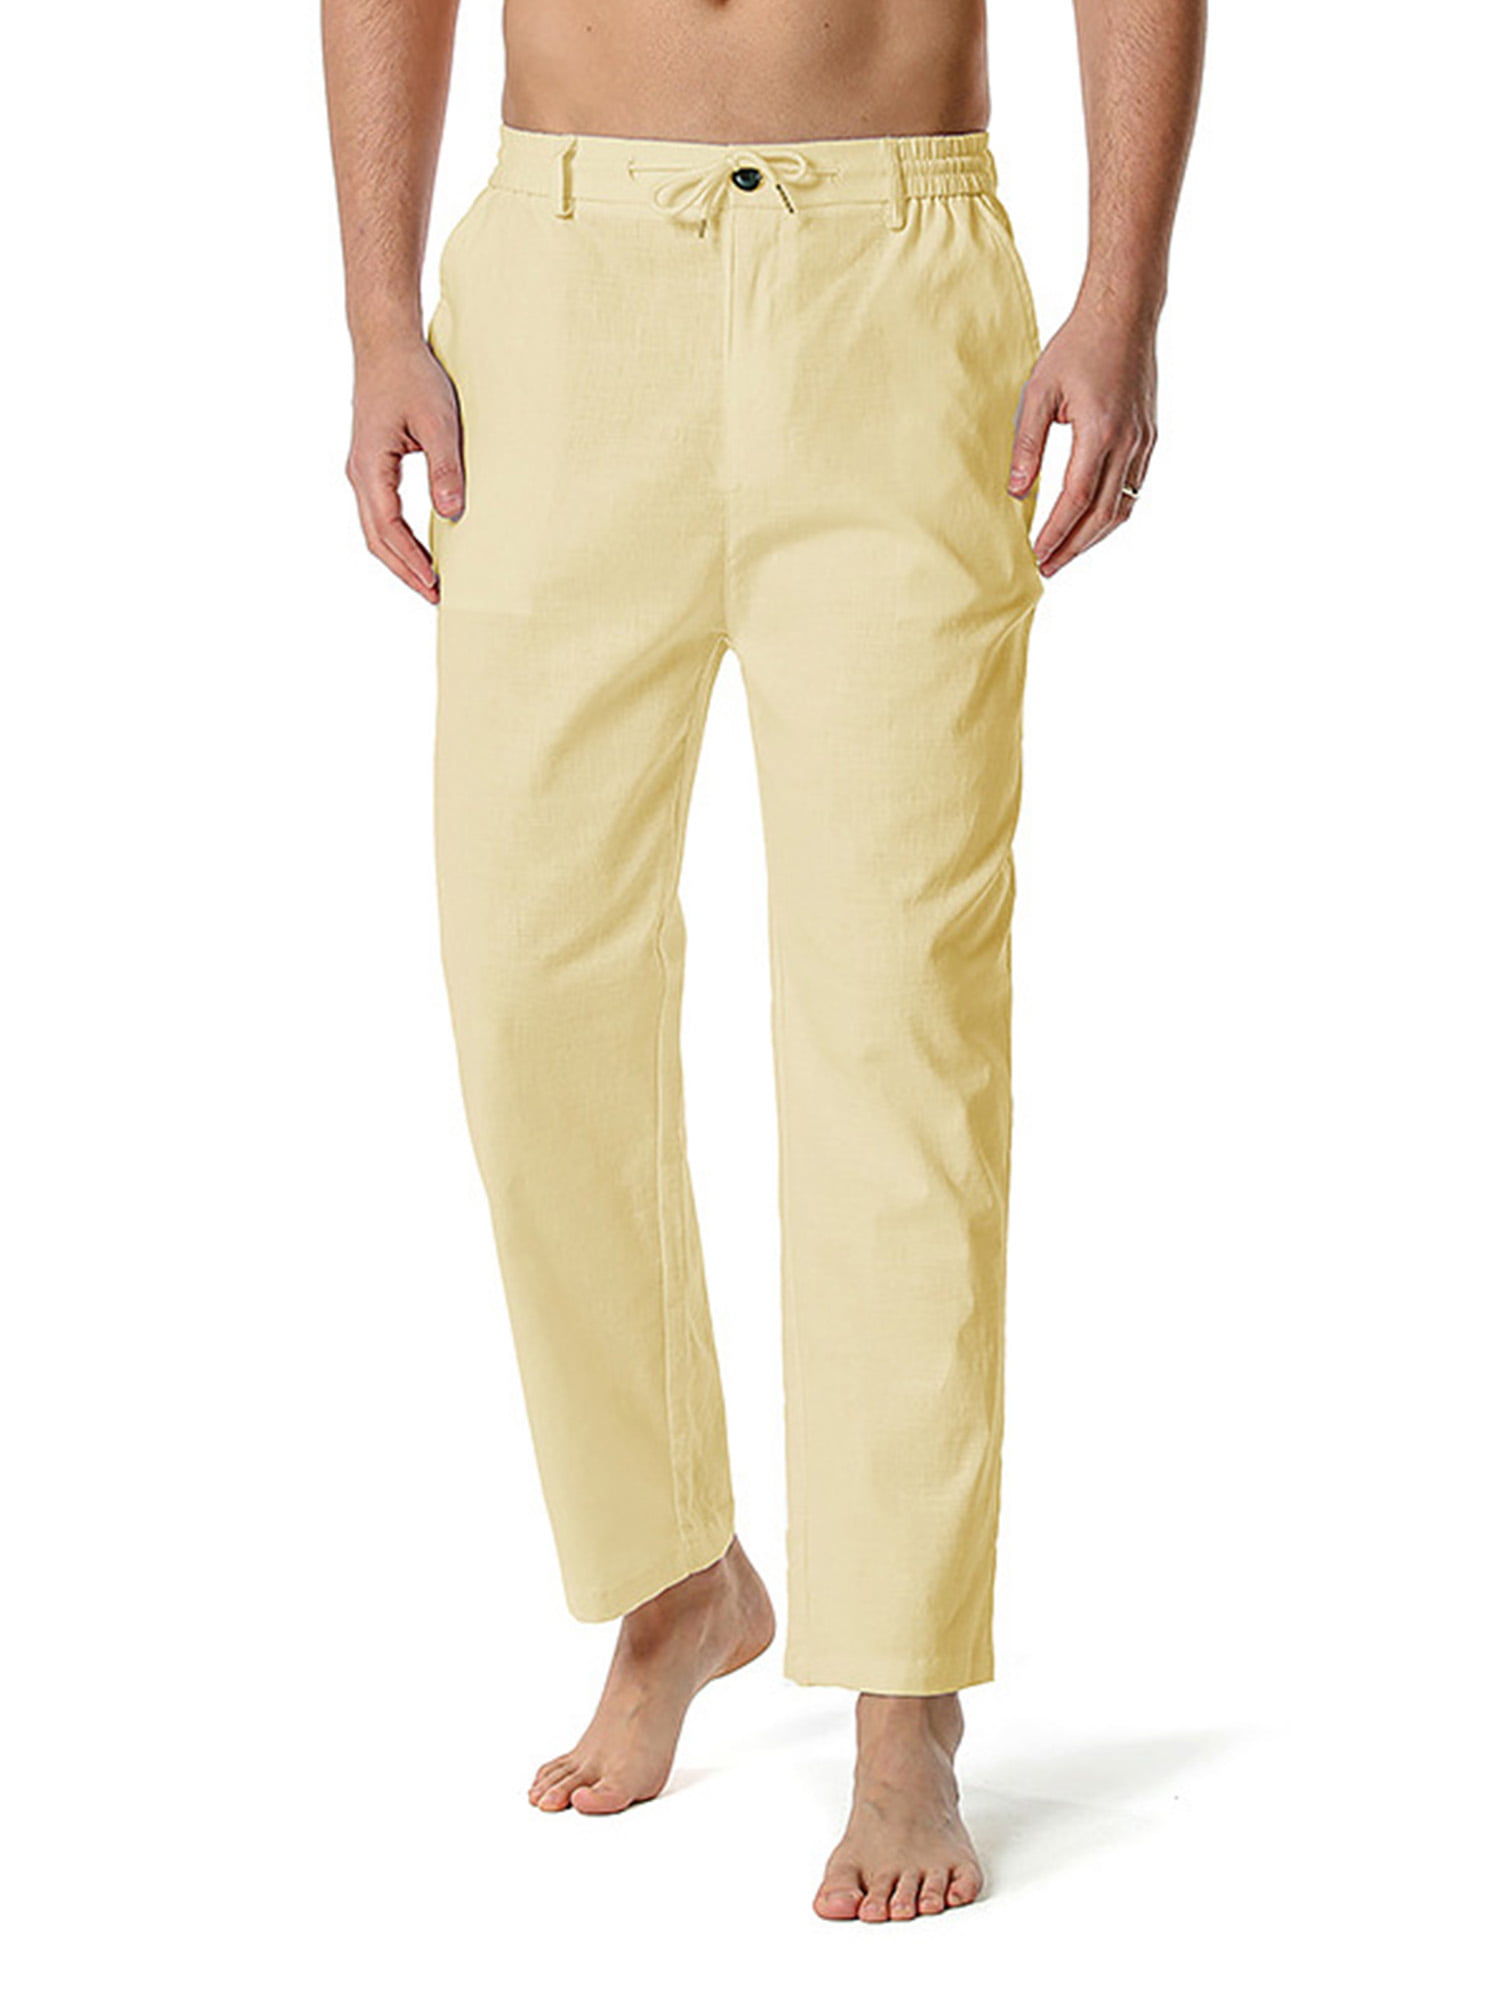 Transer Mens Cotton Linen Beach Short Loose Slim Elastic Waist Drawstring Wrinkle-Resistant Flat-Front Chino Pant